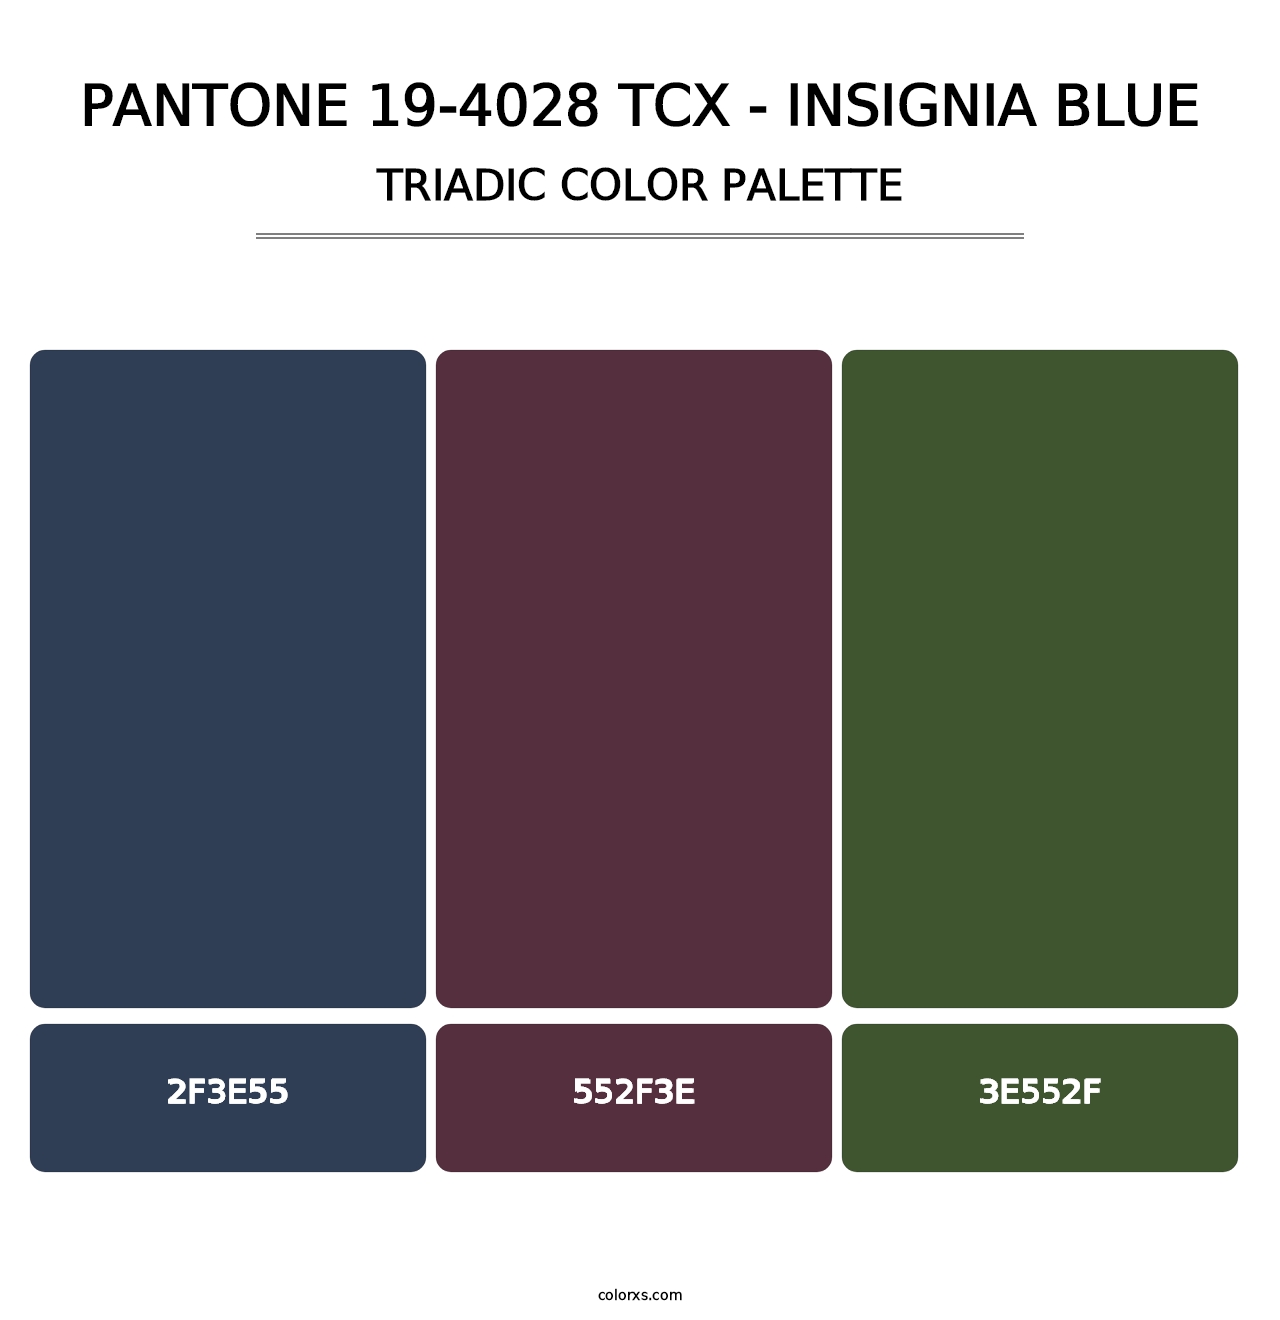 PANTONE 19-4028 TCX - Insignia Blue - Triadic Color Palette